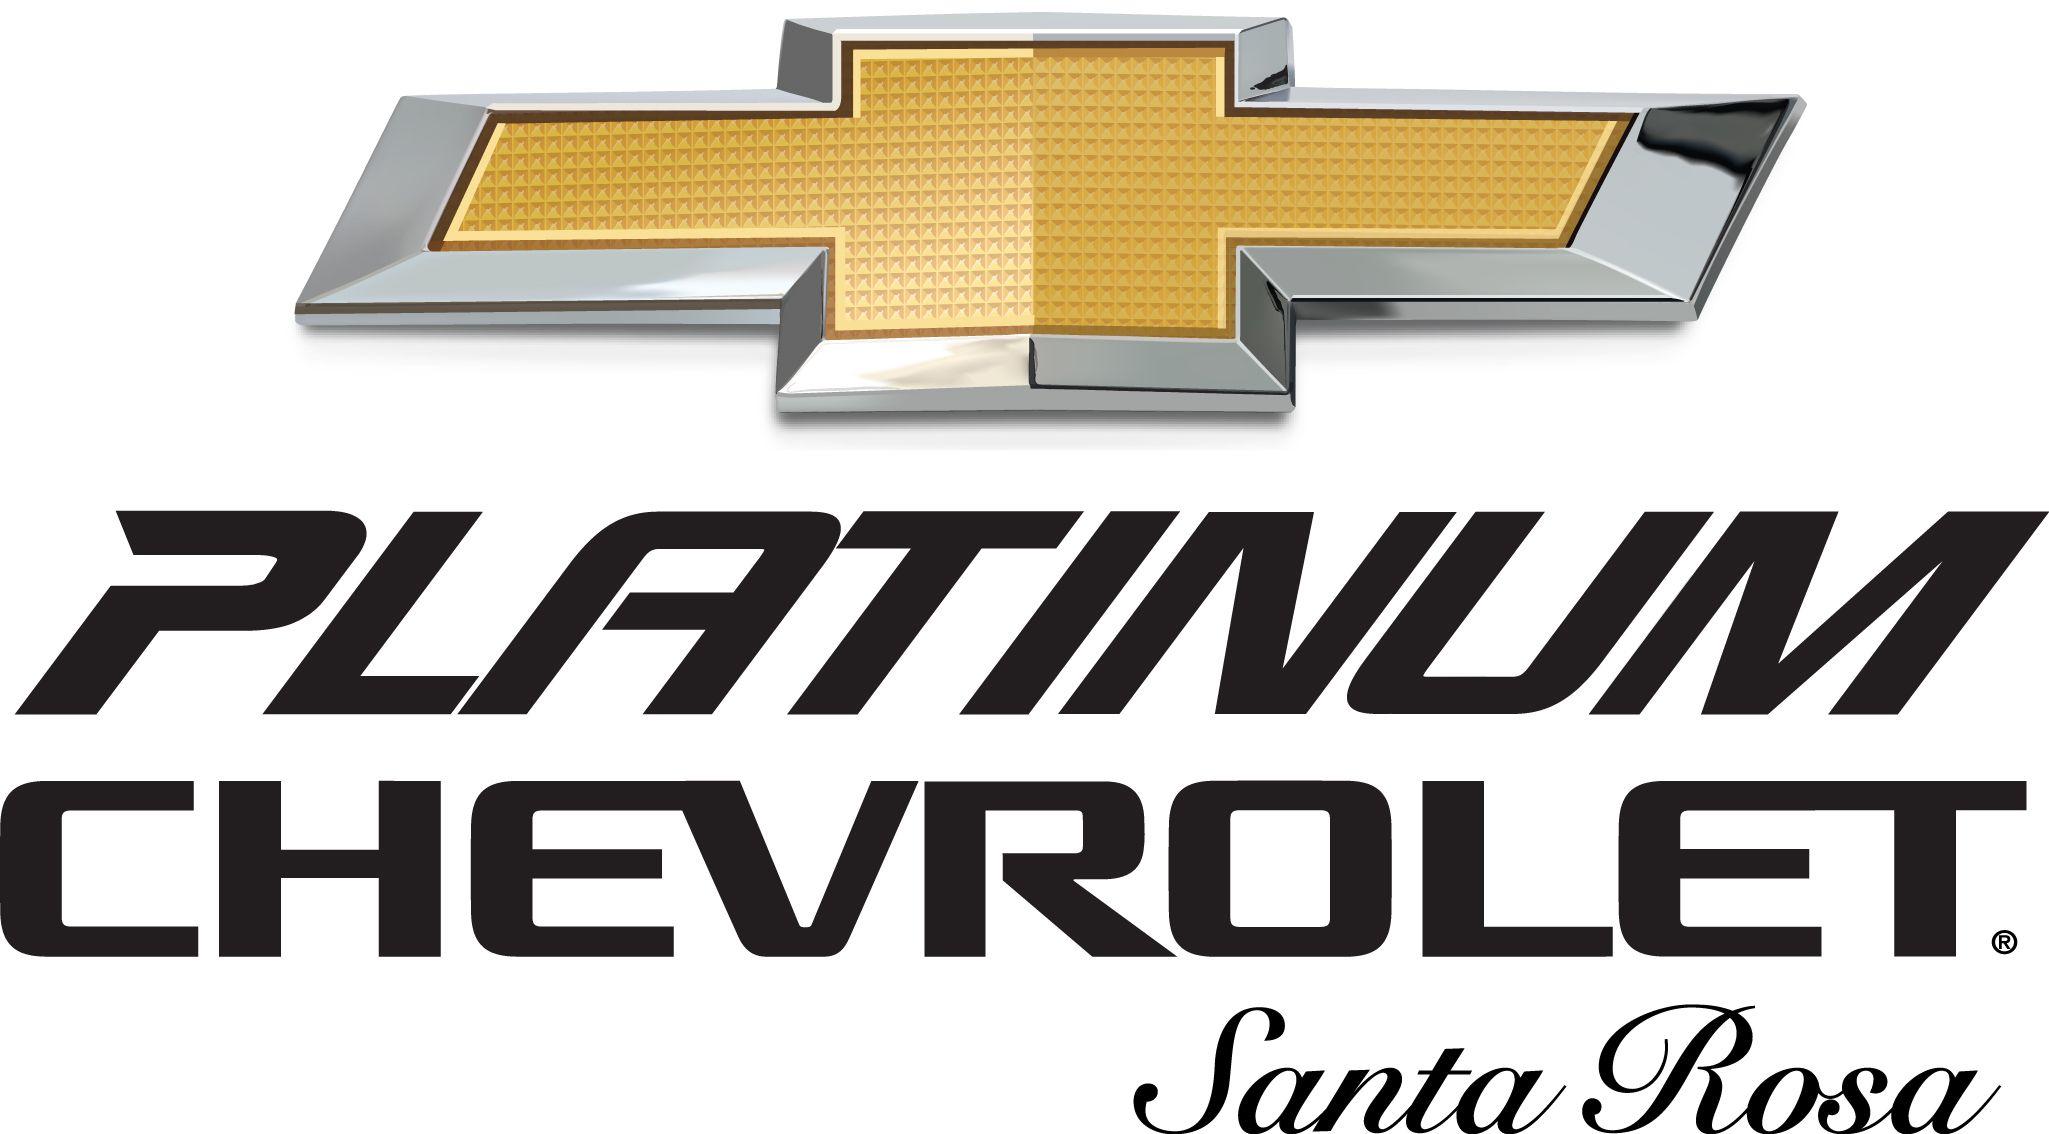 Chevrolet Malibu Logo - New 2018 Chevrolet Malibu from your Santa Rosa CA dealership ...